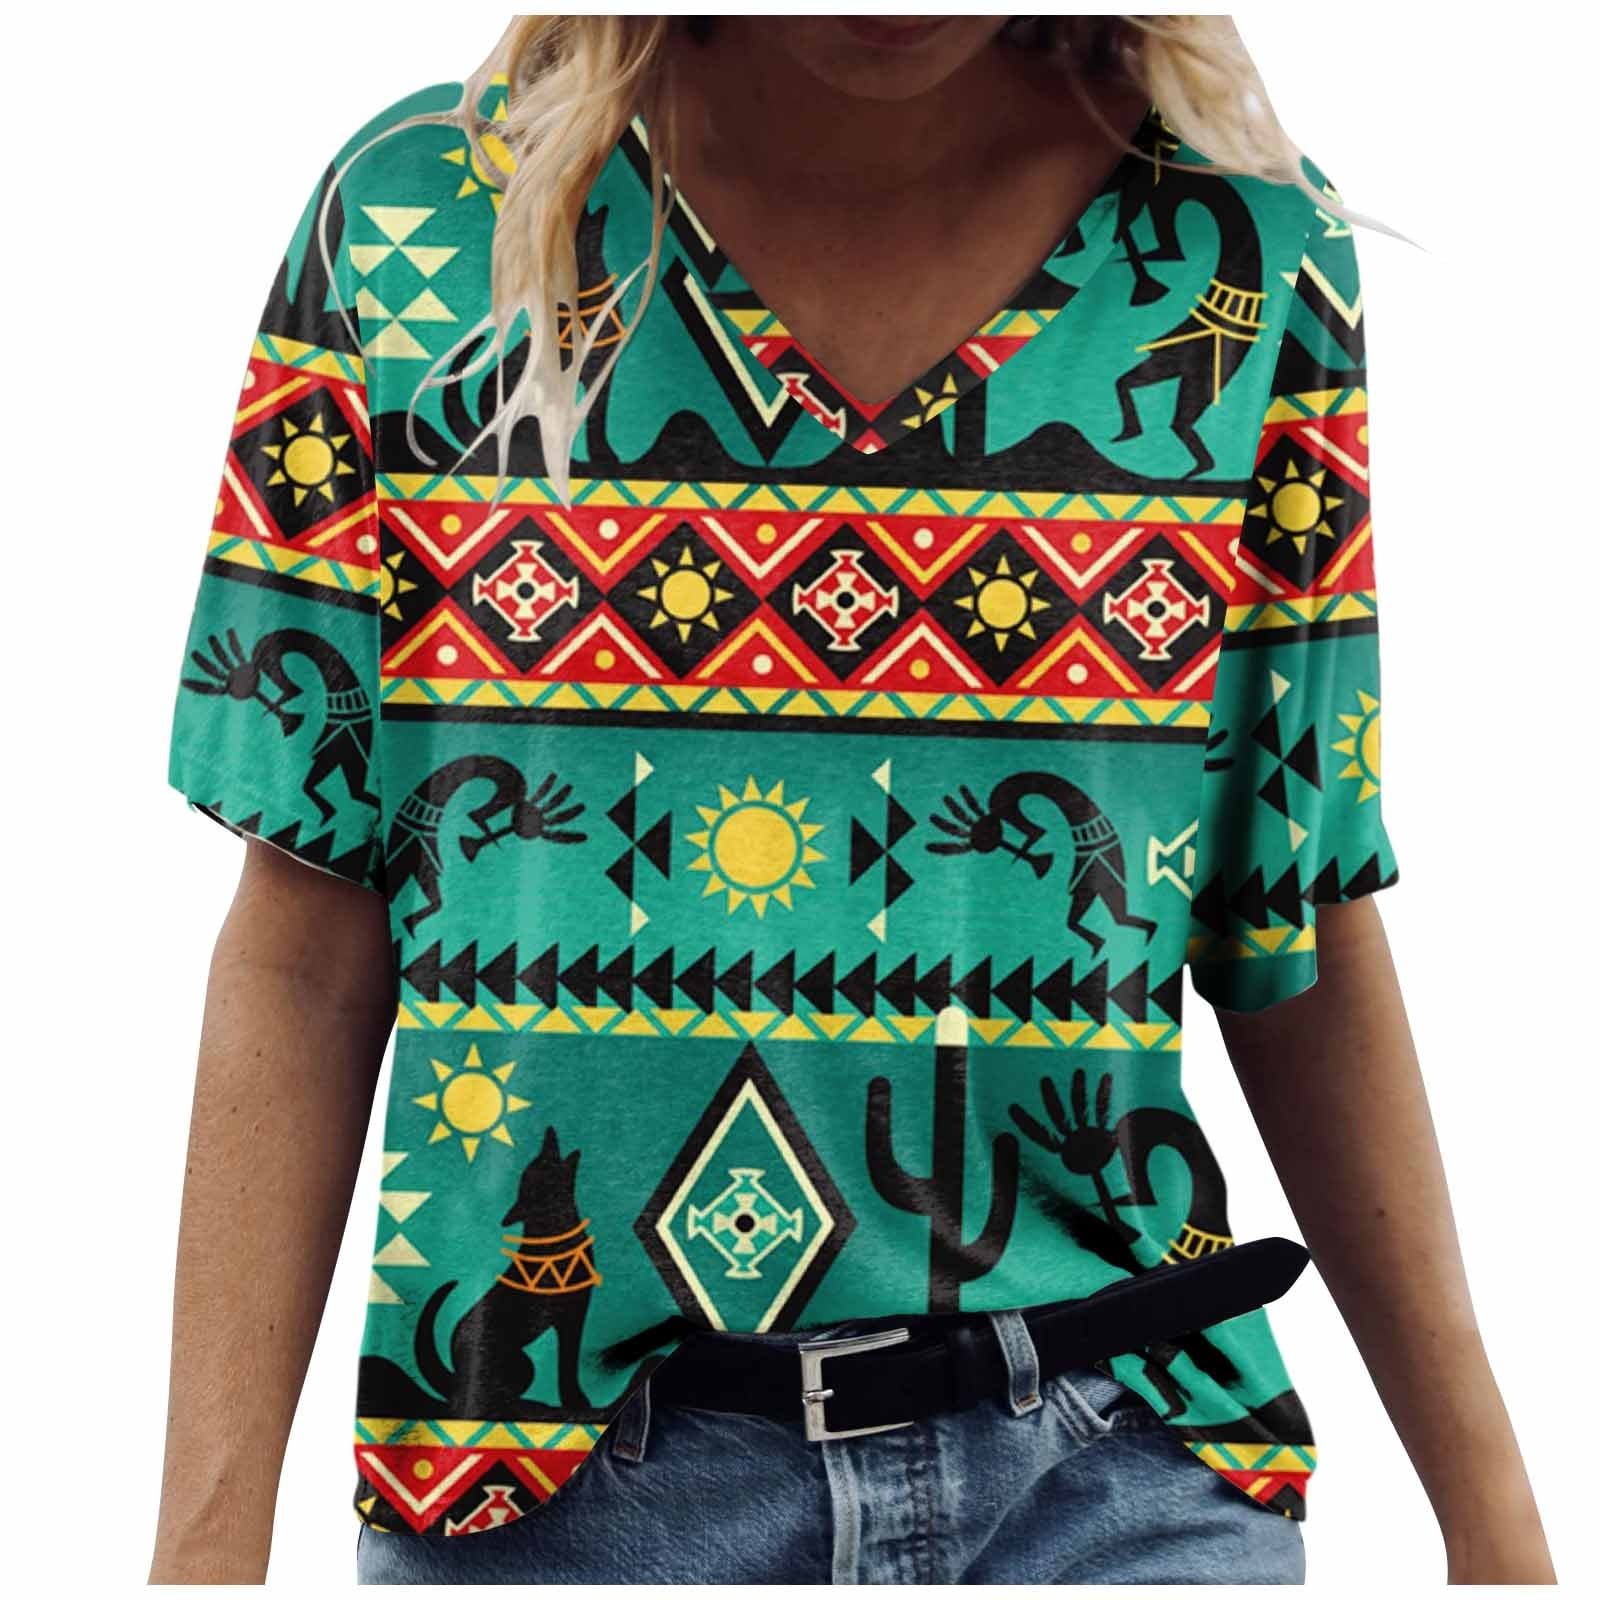 TQWQT Womens T Shirts Aztec Western Ethnic V Neck T Shirts Short Sleeve  Summer Tops Loose Fit,Blue XXL 